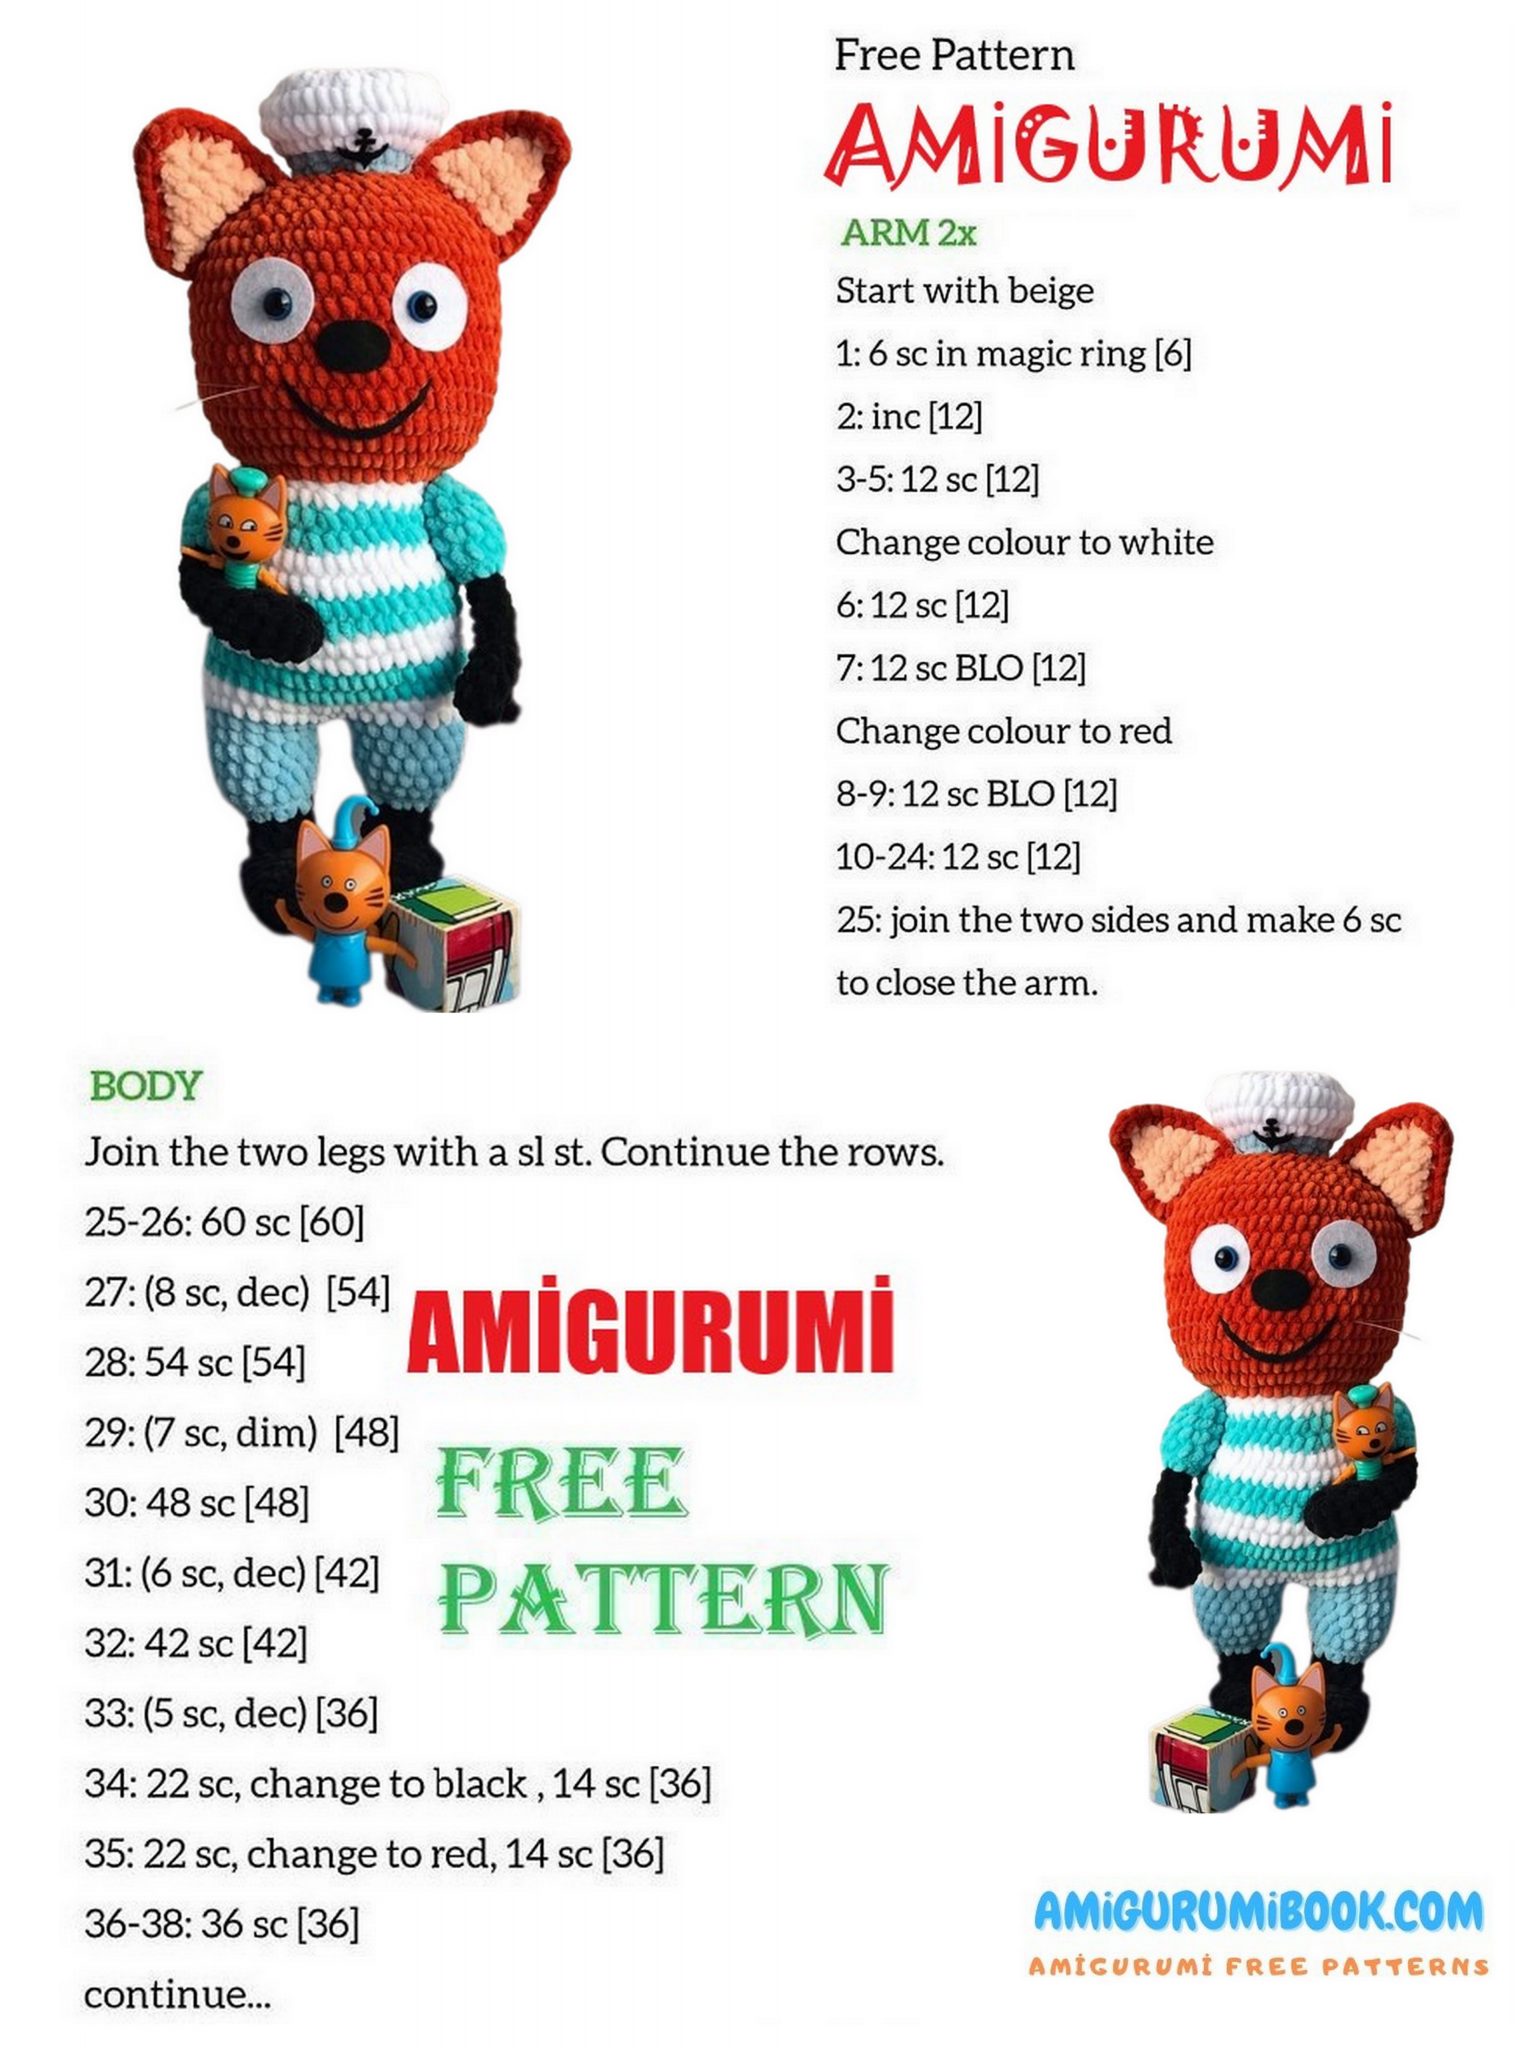 Captain Cat Amigurumi Free Pattern – Free Amigurumi Crochet Patterns